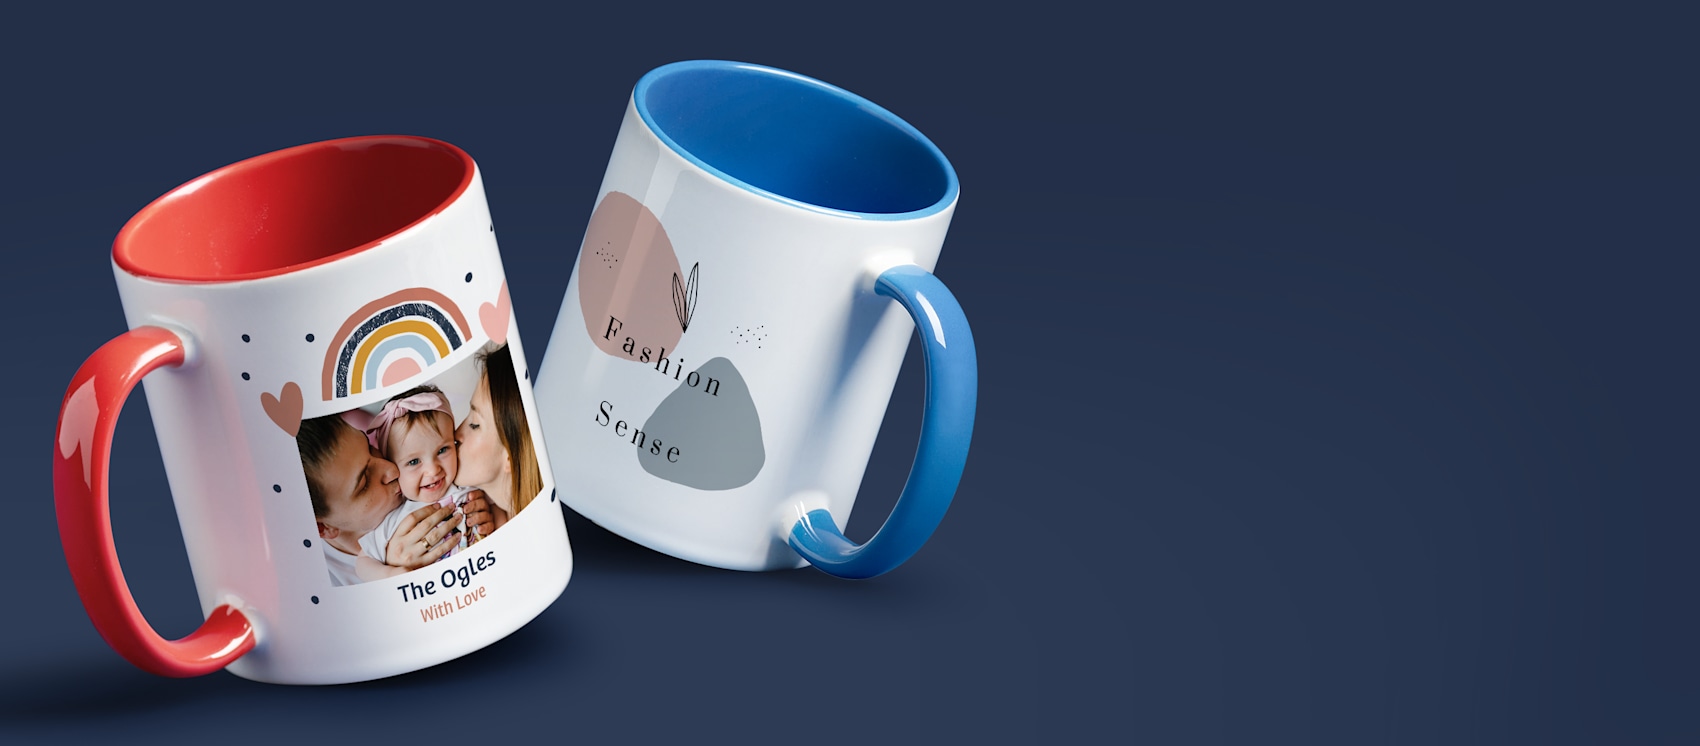 11oz Personalized ceramic coffee or tea mug add your own logo text or design qty:25 mugs